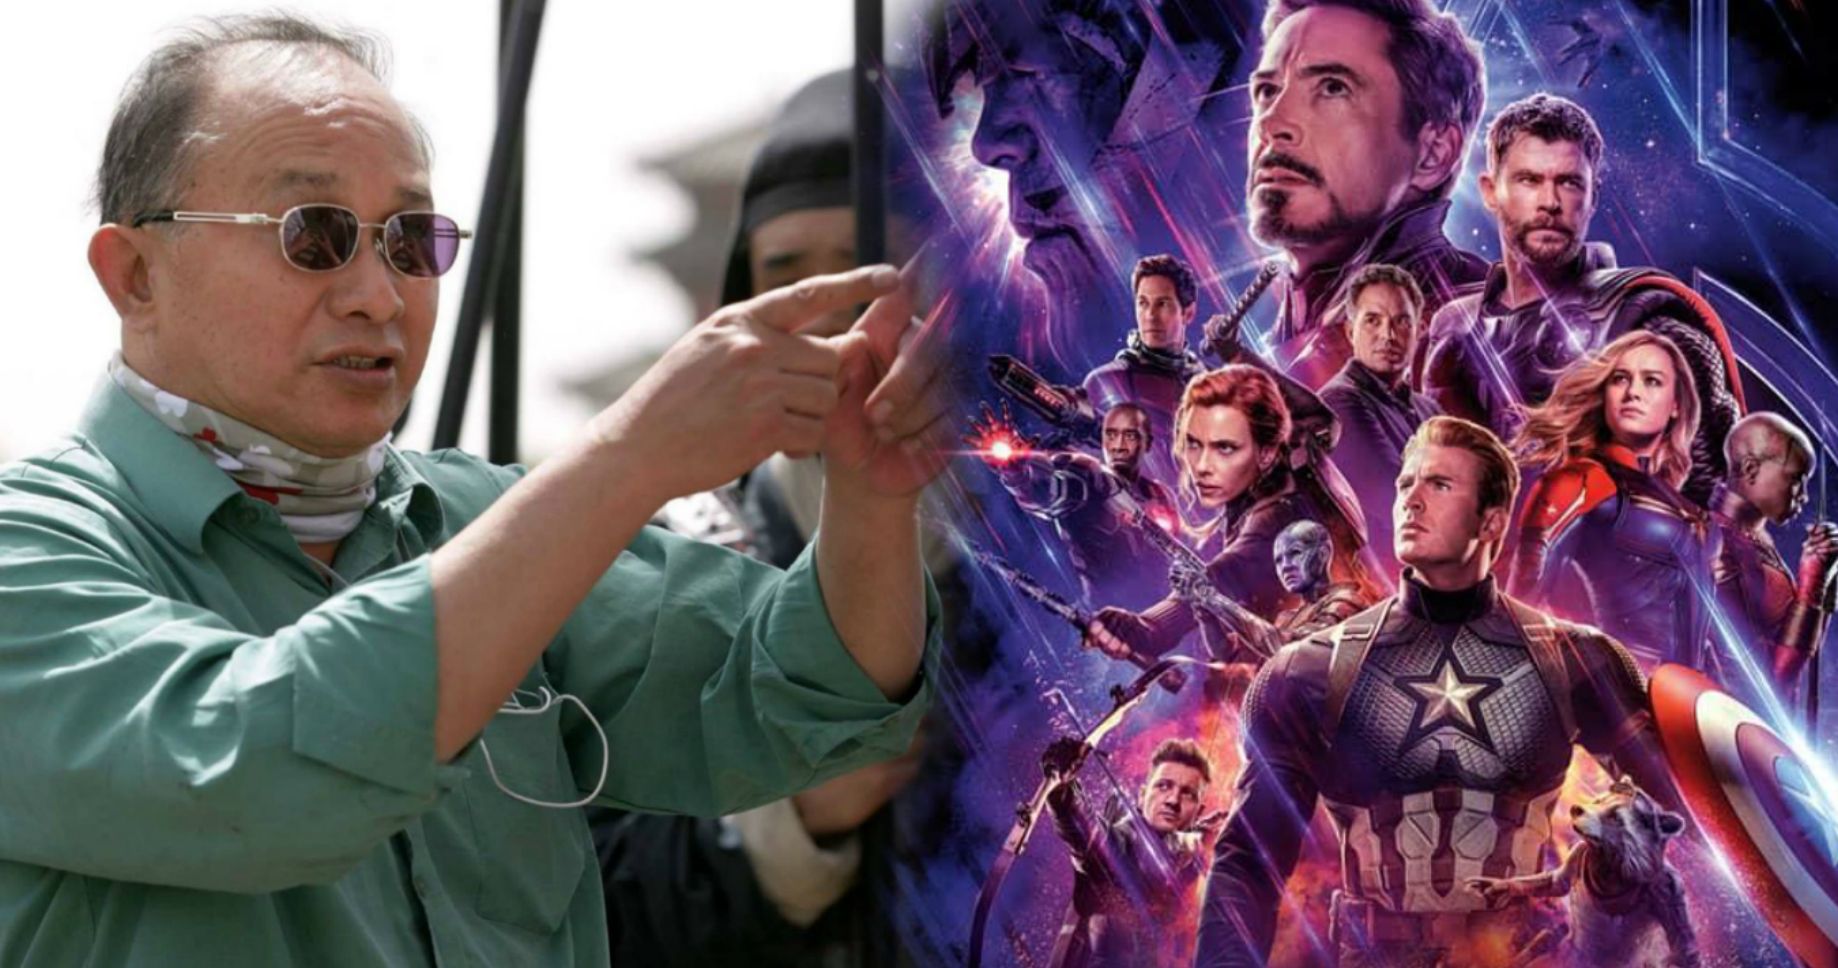 Why Action Master John Woo Will Never Make a Superhero Movie